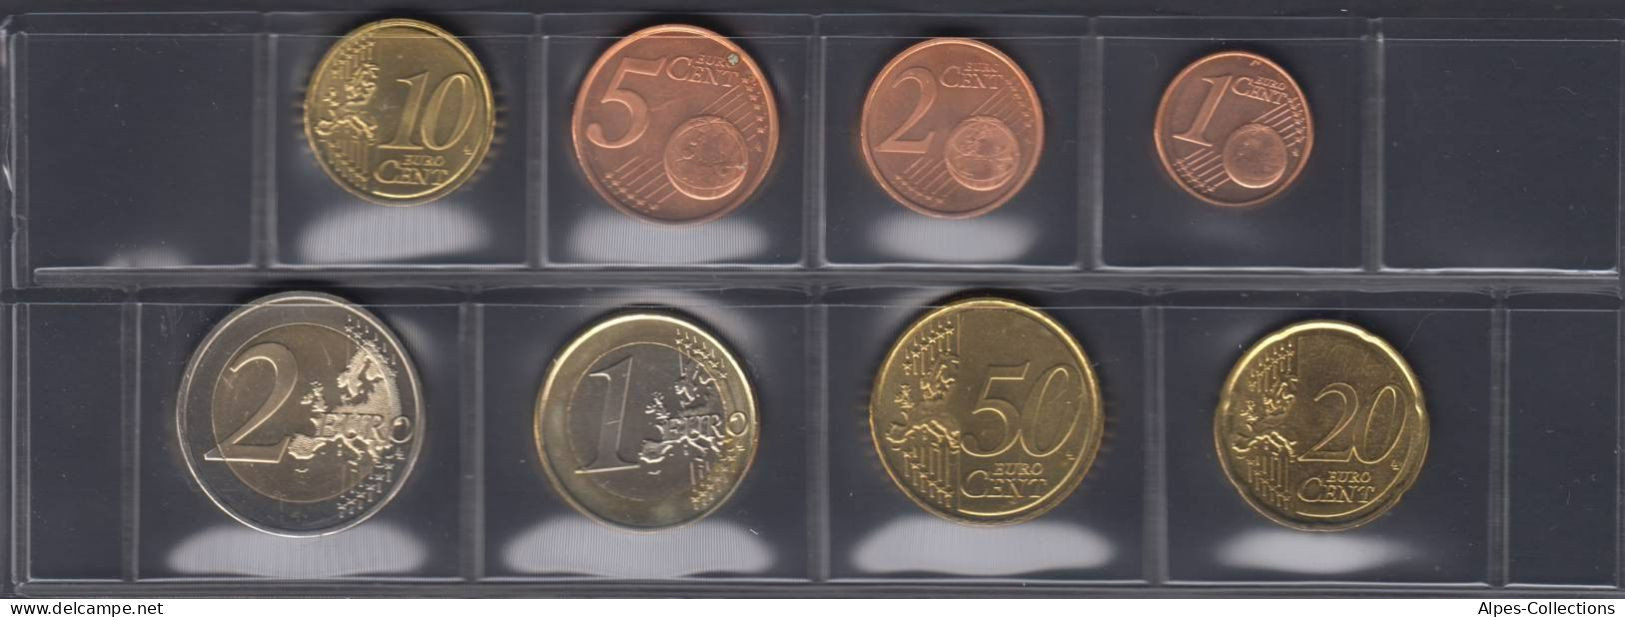 CHX2008.4 - SERIE CHYPRE - 2008 - 1 Cent à 2 Euros - Zypern